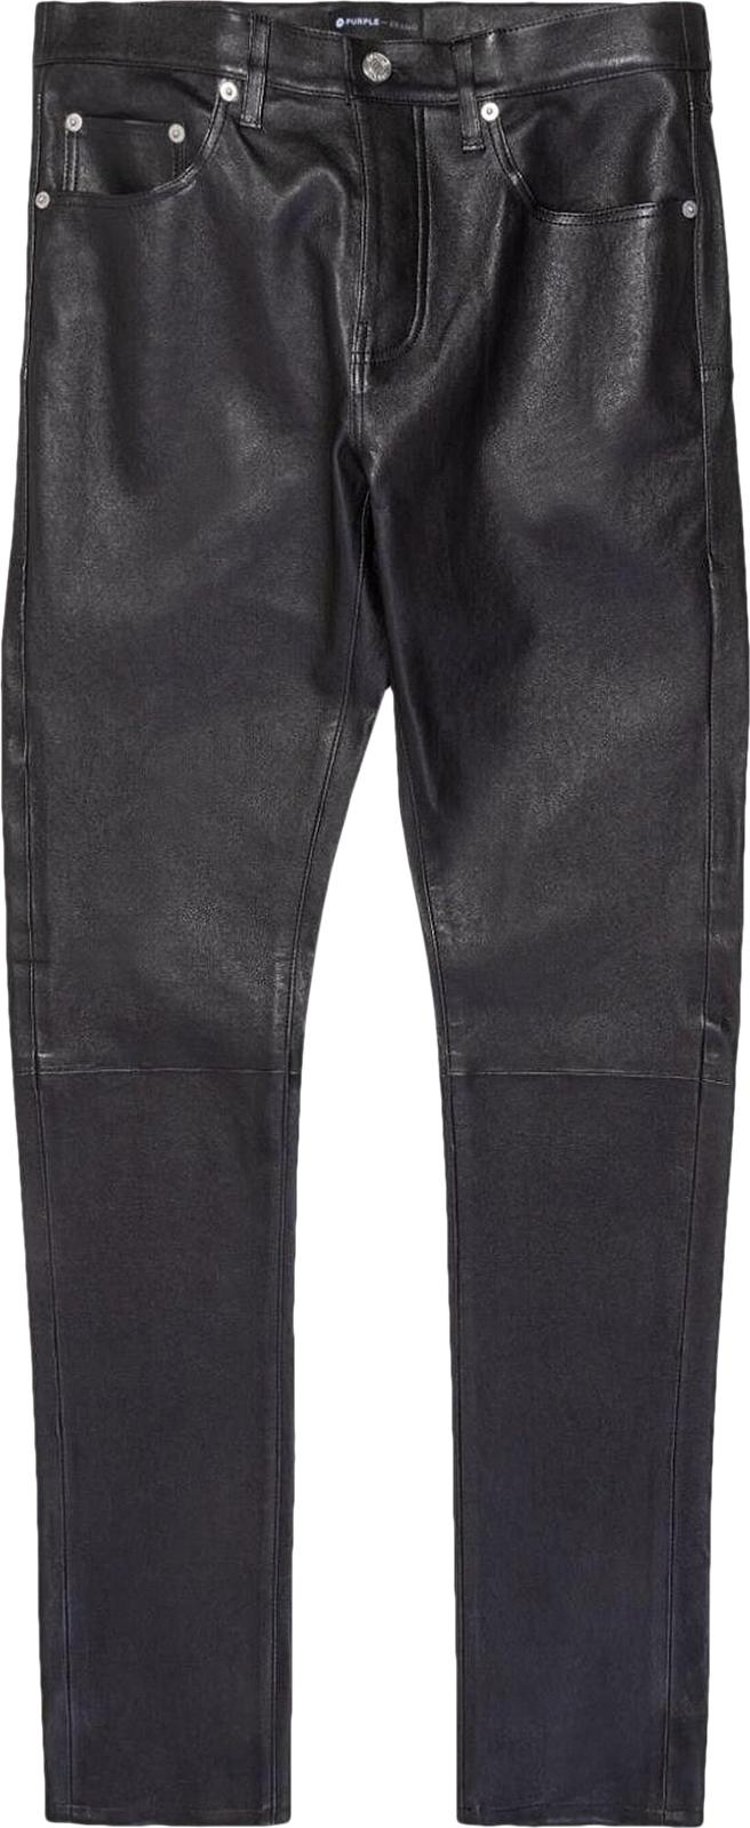 PURPLE BRAND Stretch Leather Skinny Pant 'Black'